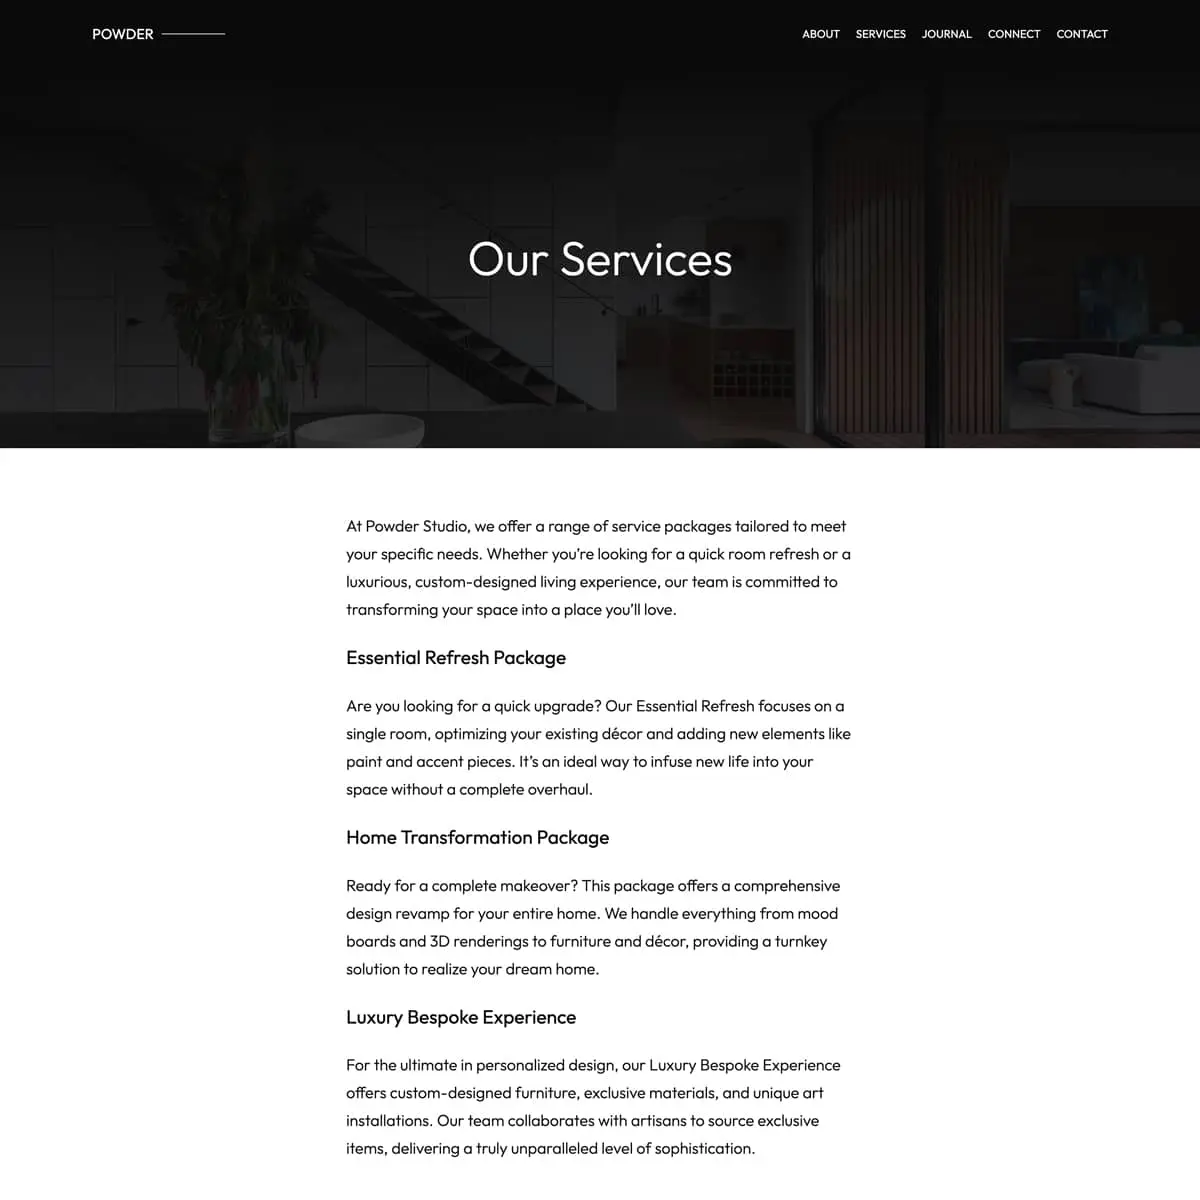 Powder Business WordPress theme services page